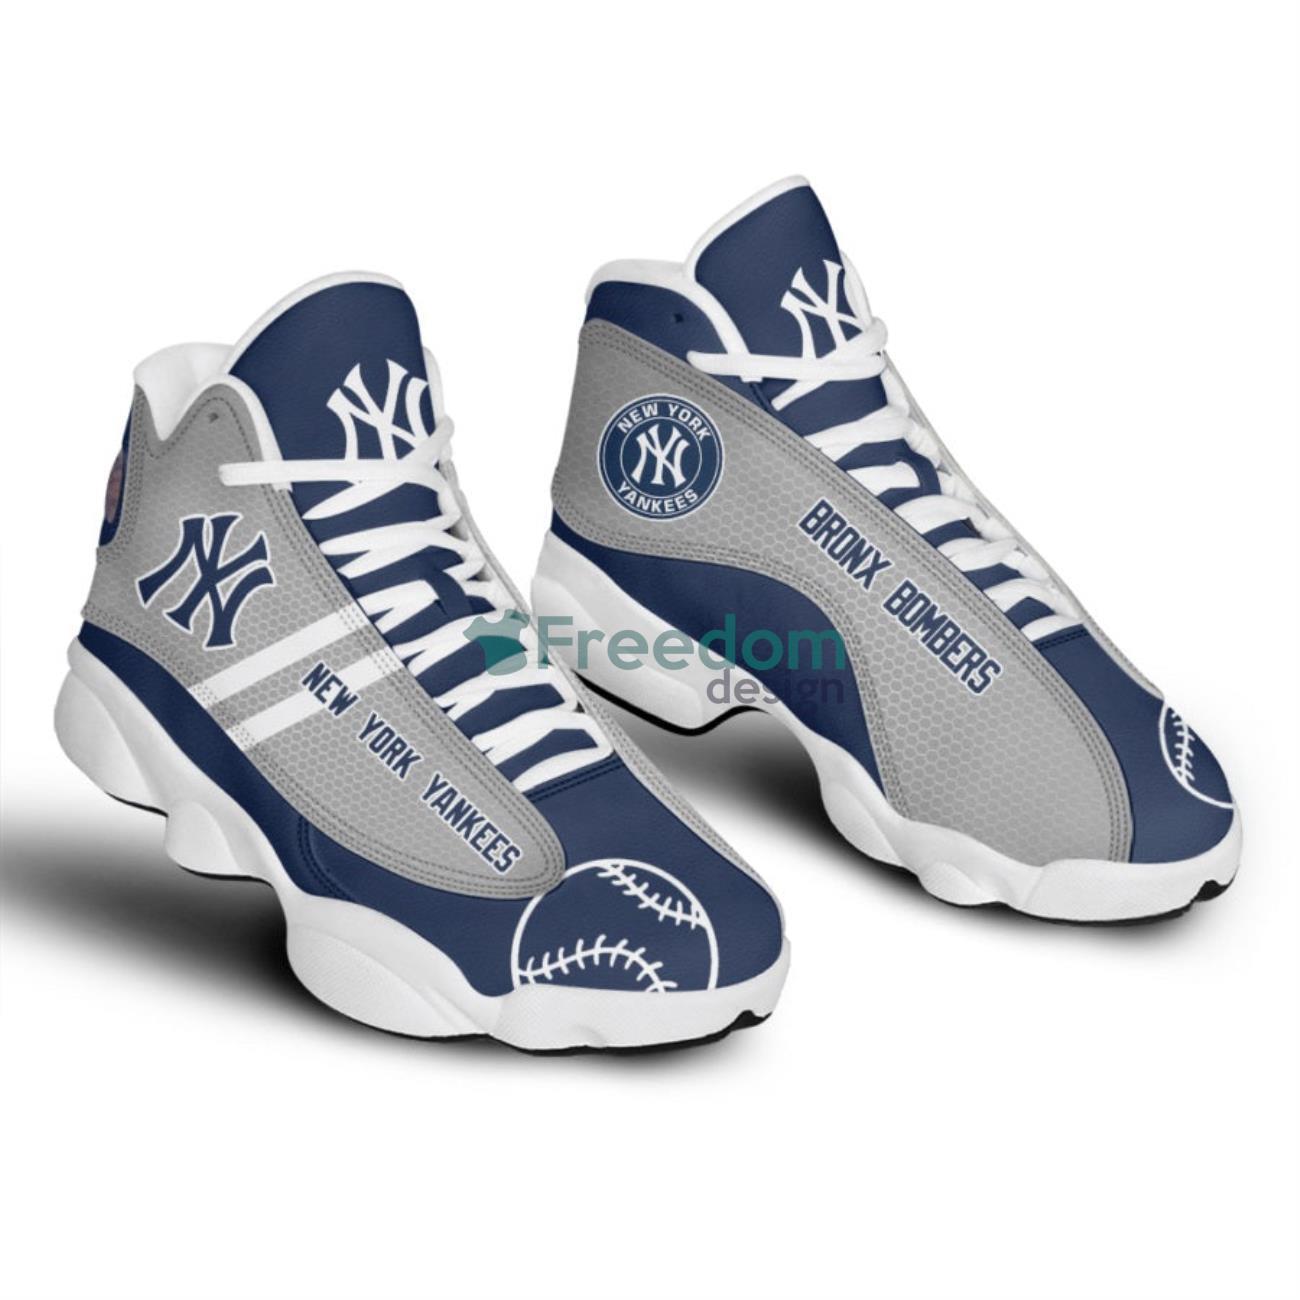 New York Yankees White Striped Air Jordan 13 Sneaker Shoes For Fans